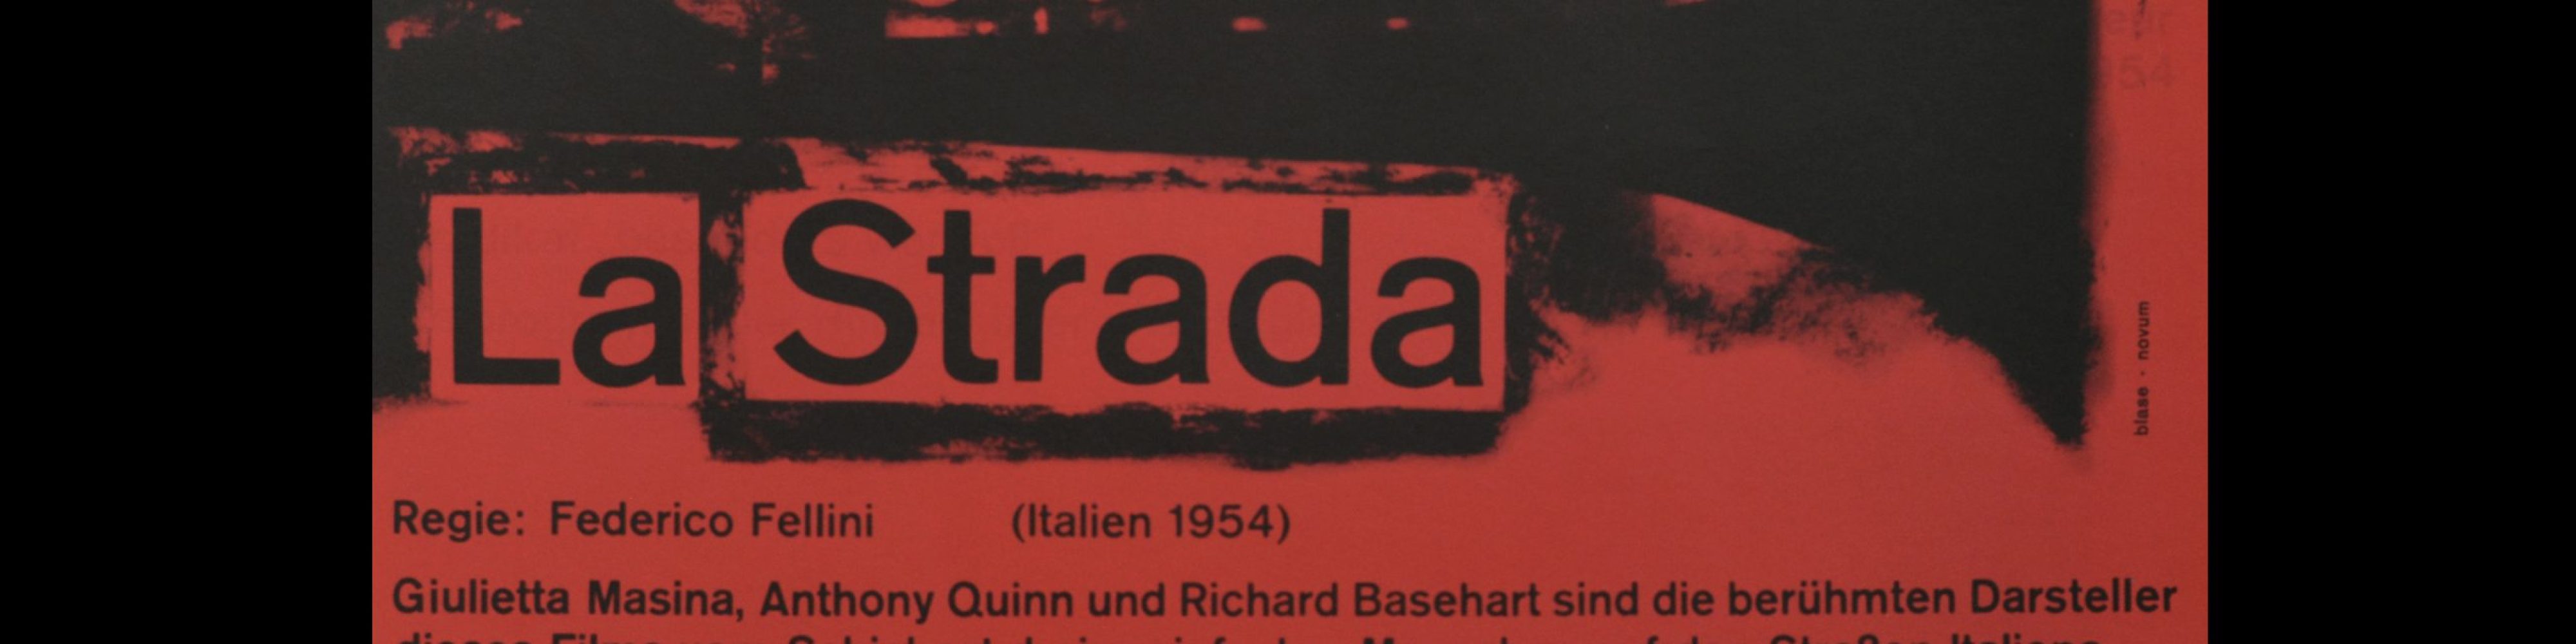 La Strada, Atlas Films Poster, 1960s. Designed by Karl Oskar Blase